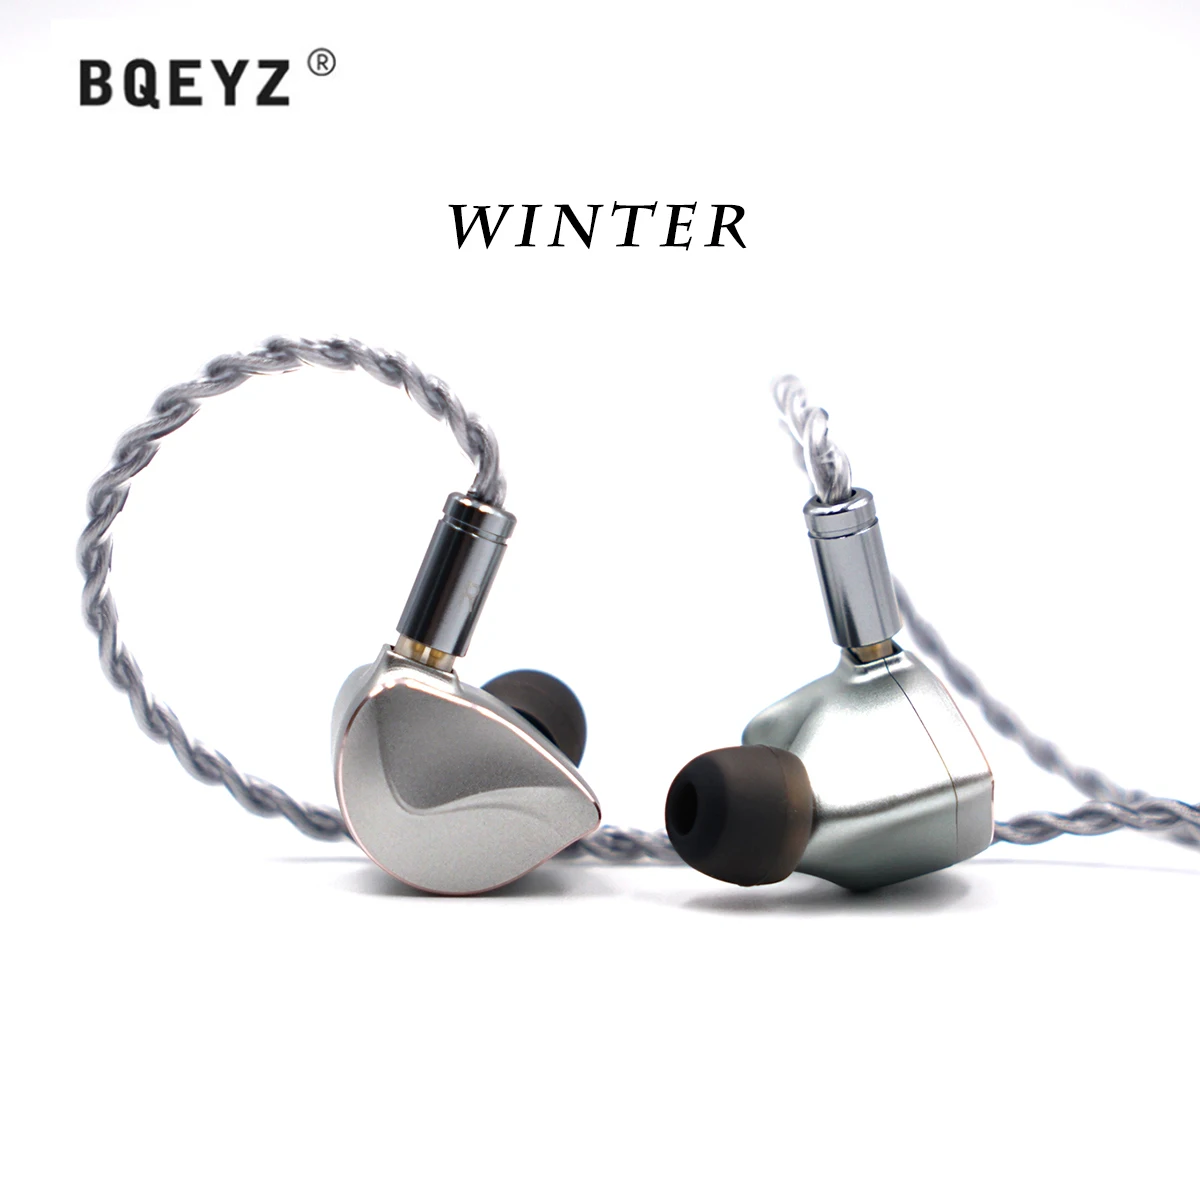 

BQEYZ Winter Earphone HiFi Dynamic Driver PZT Bone Conduction In-Ear Monitor Wired Earbud with Detachable Cable Headphone